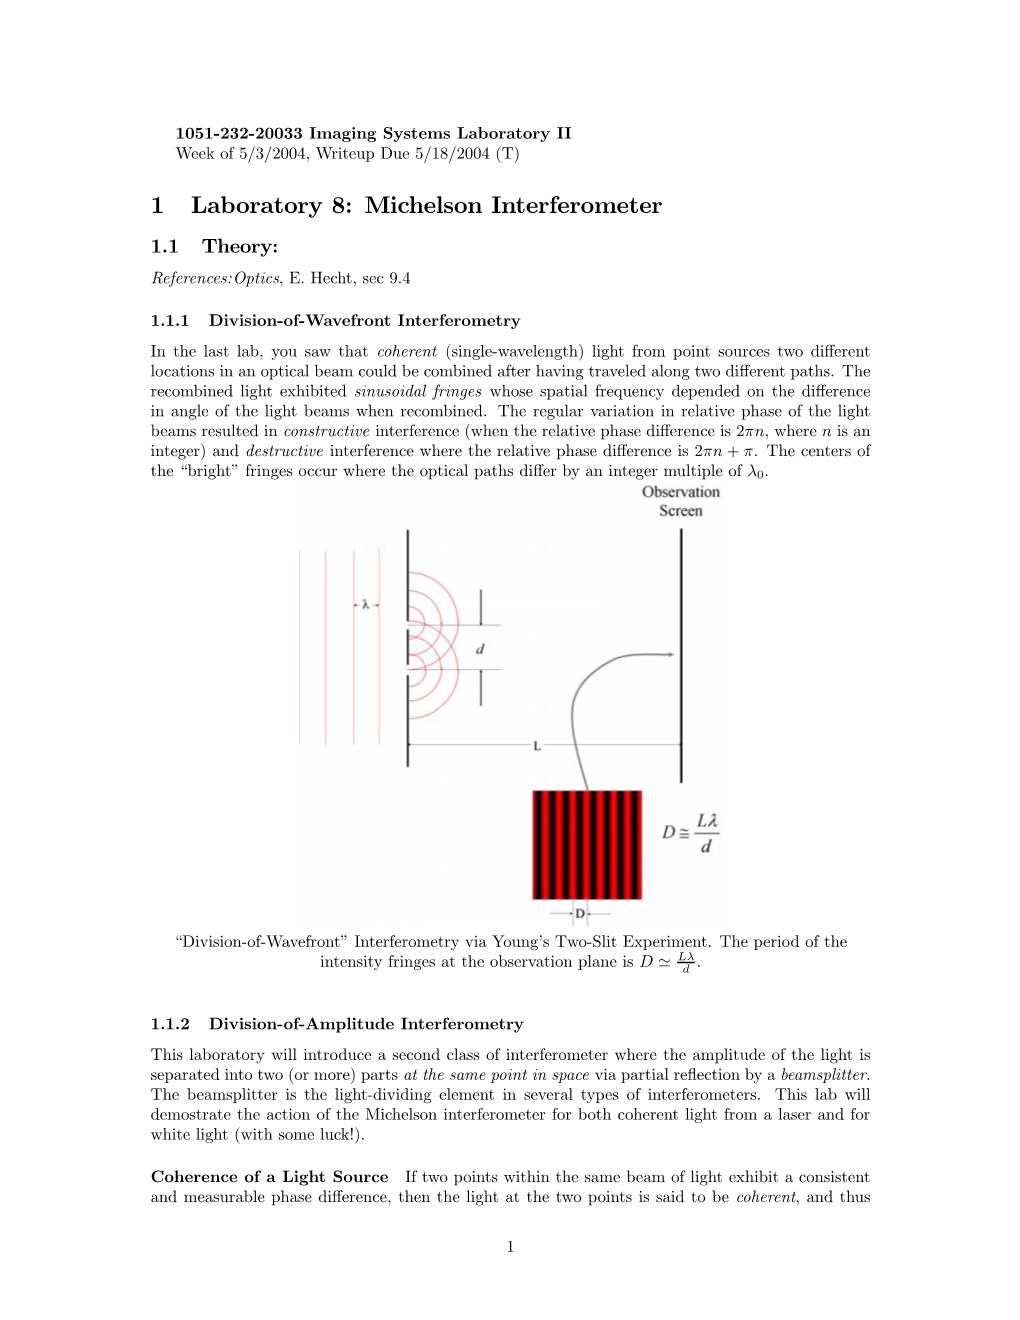 1 Laboratory 8: Michelson Interferometer 1.1 Theory: References:Optics,E.Hecht,Sec 9.4